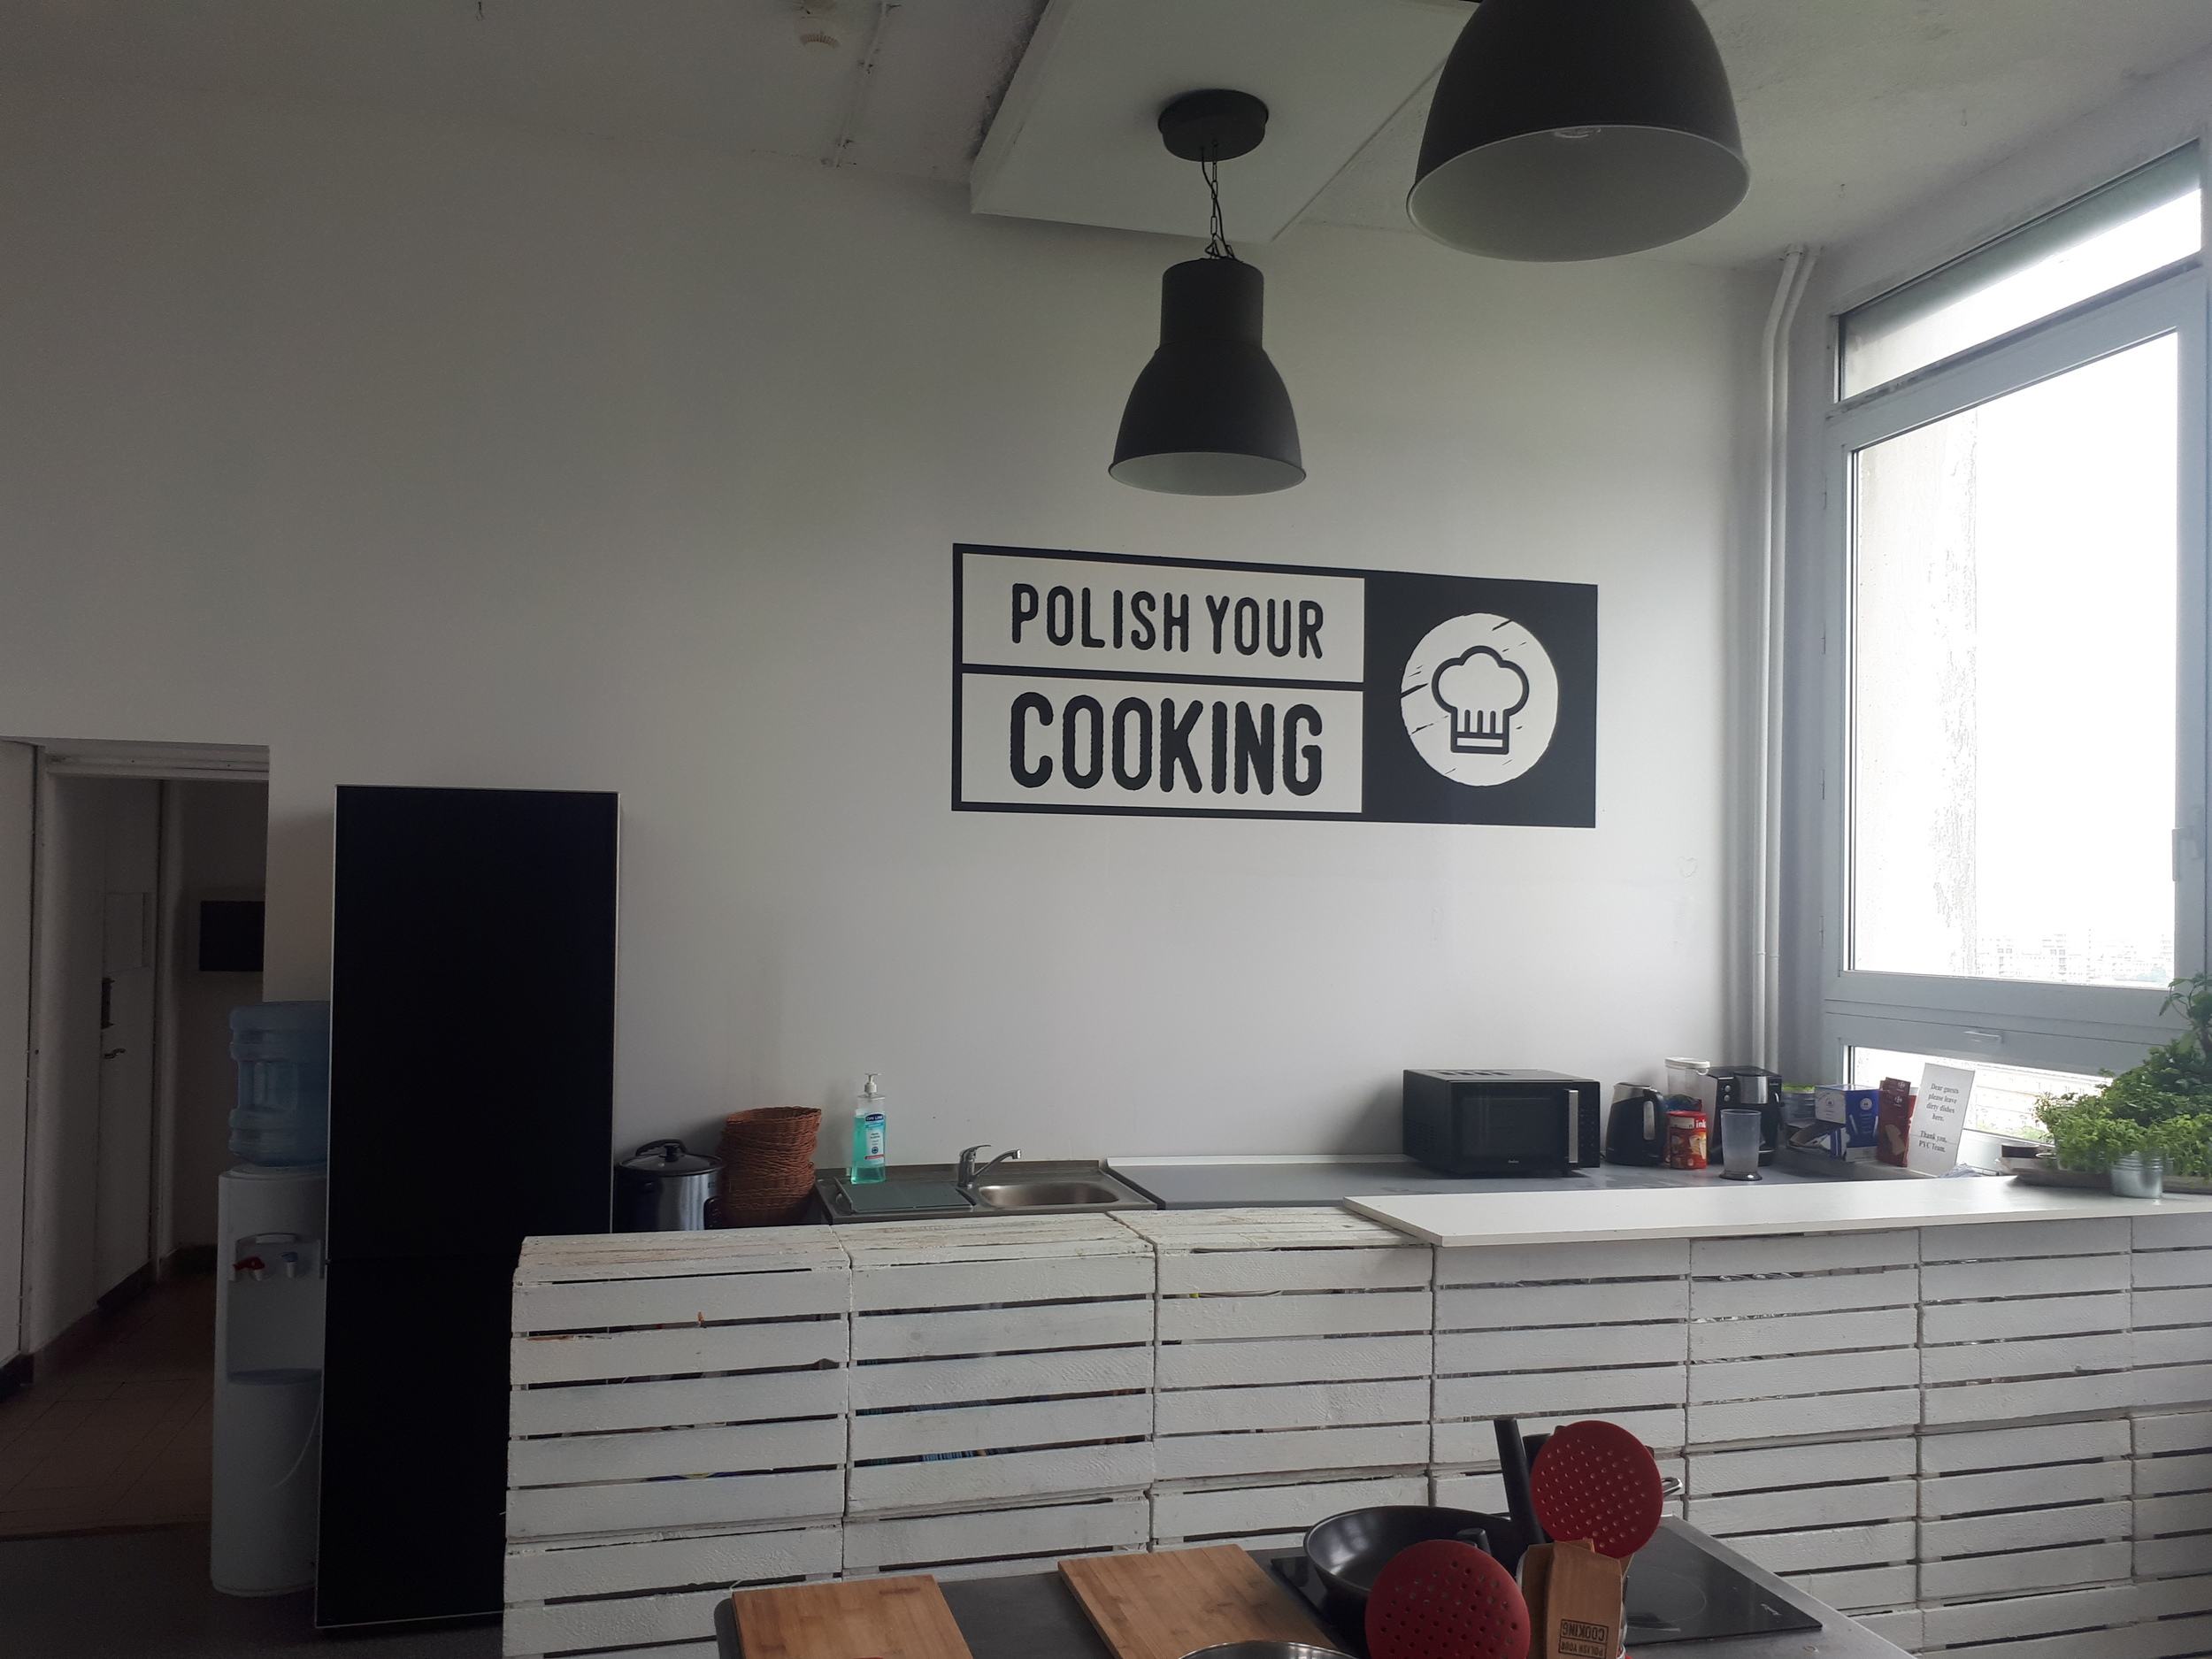 POLISH YOUR COOKING - Cooking School in Warszawa, Mazowieckie at ul. Długa  44 / 50 - Phone Number - Yelp